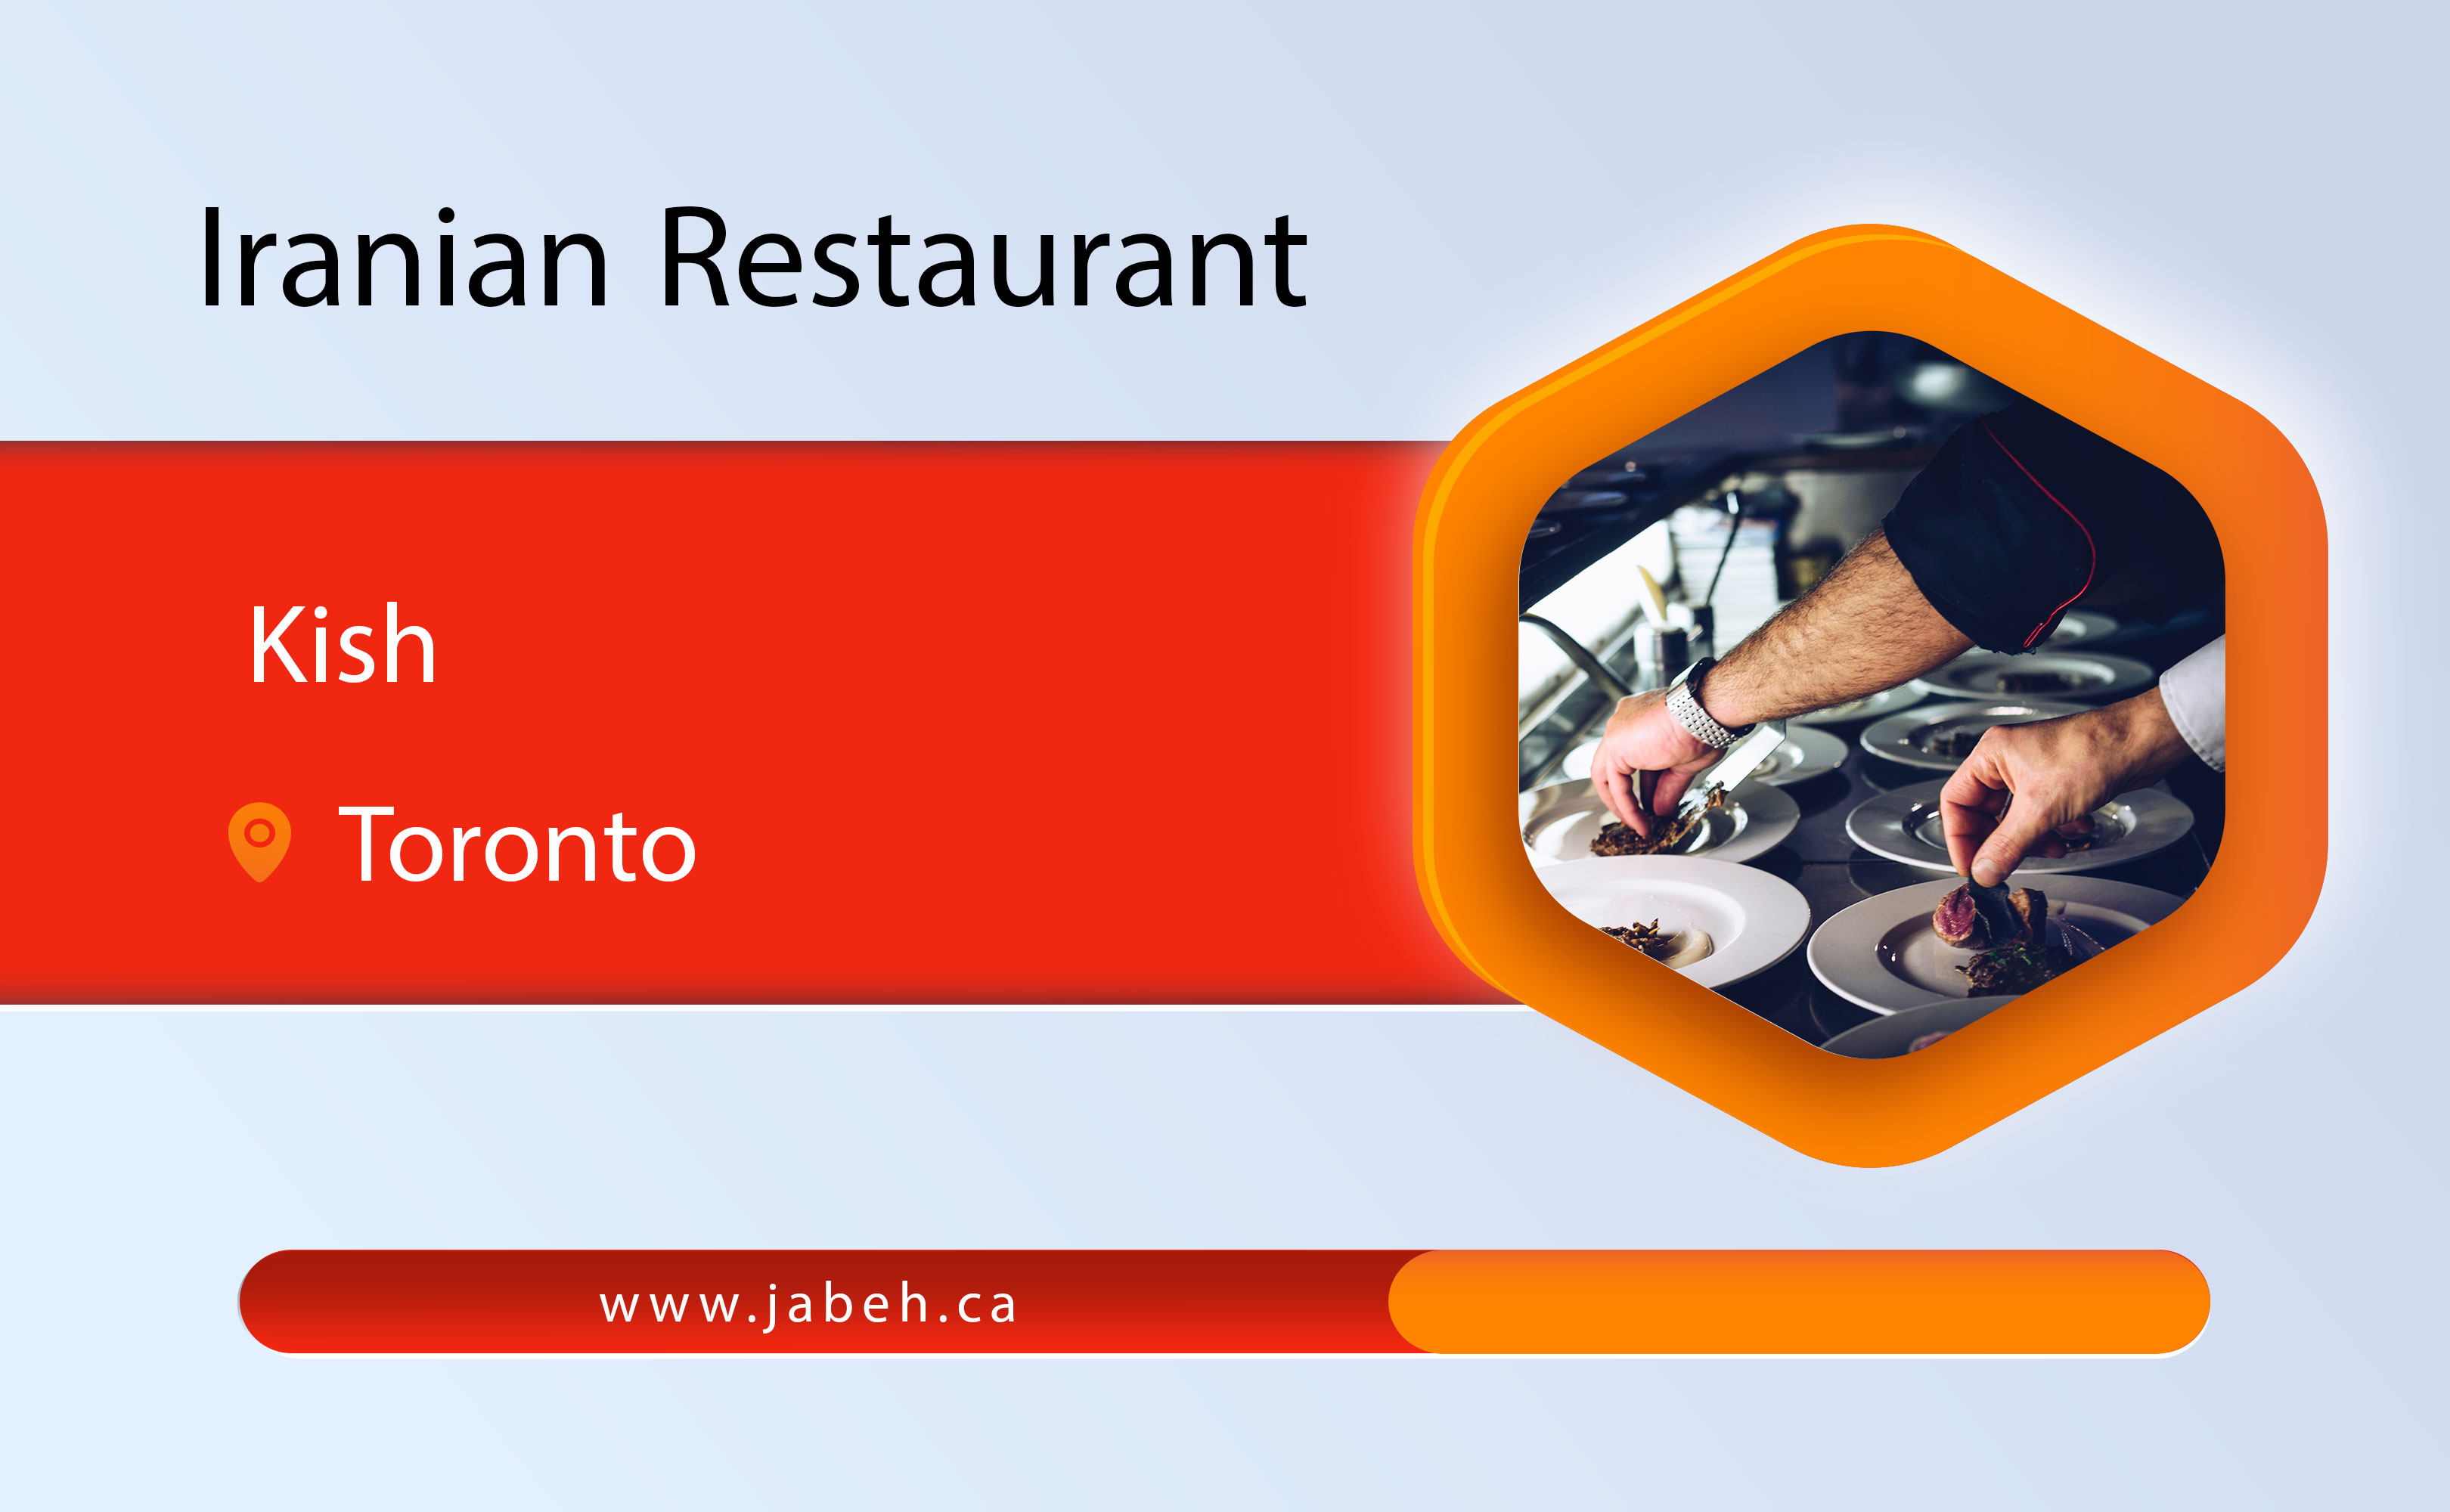 Kish Iranian restaurant in Toronto